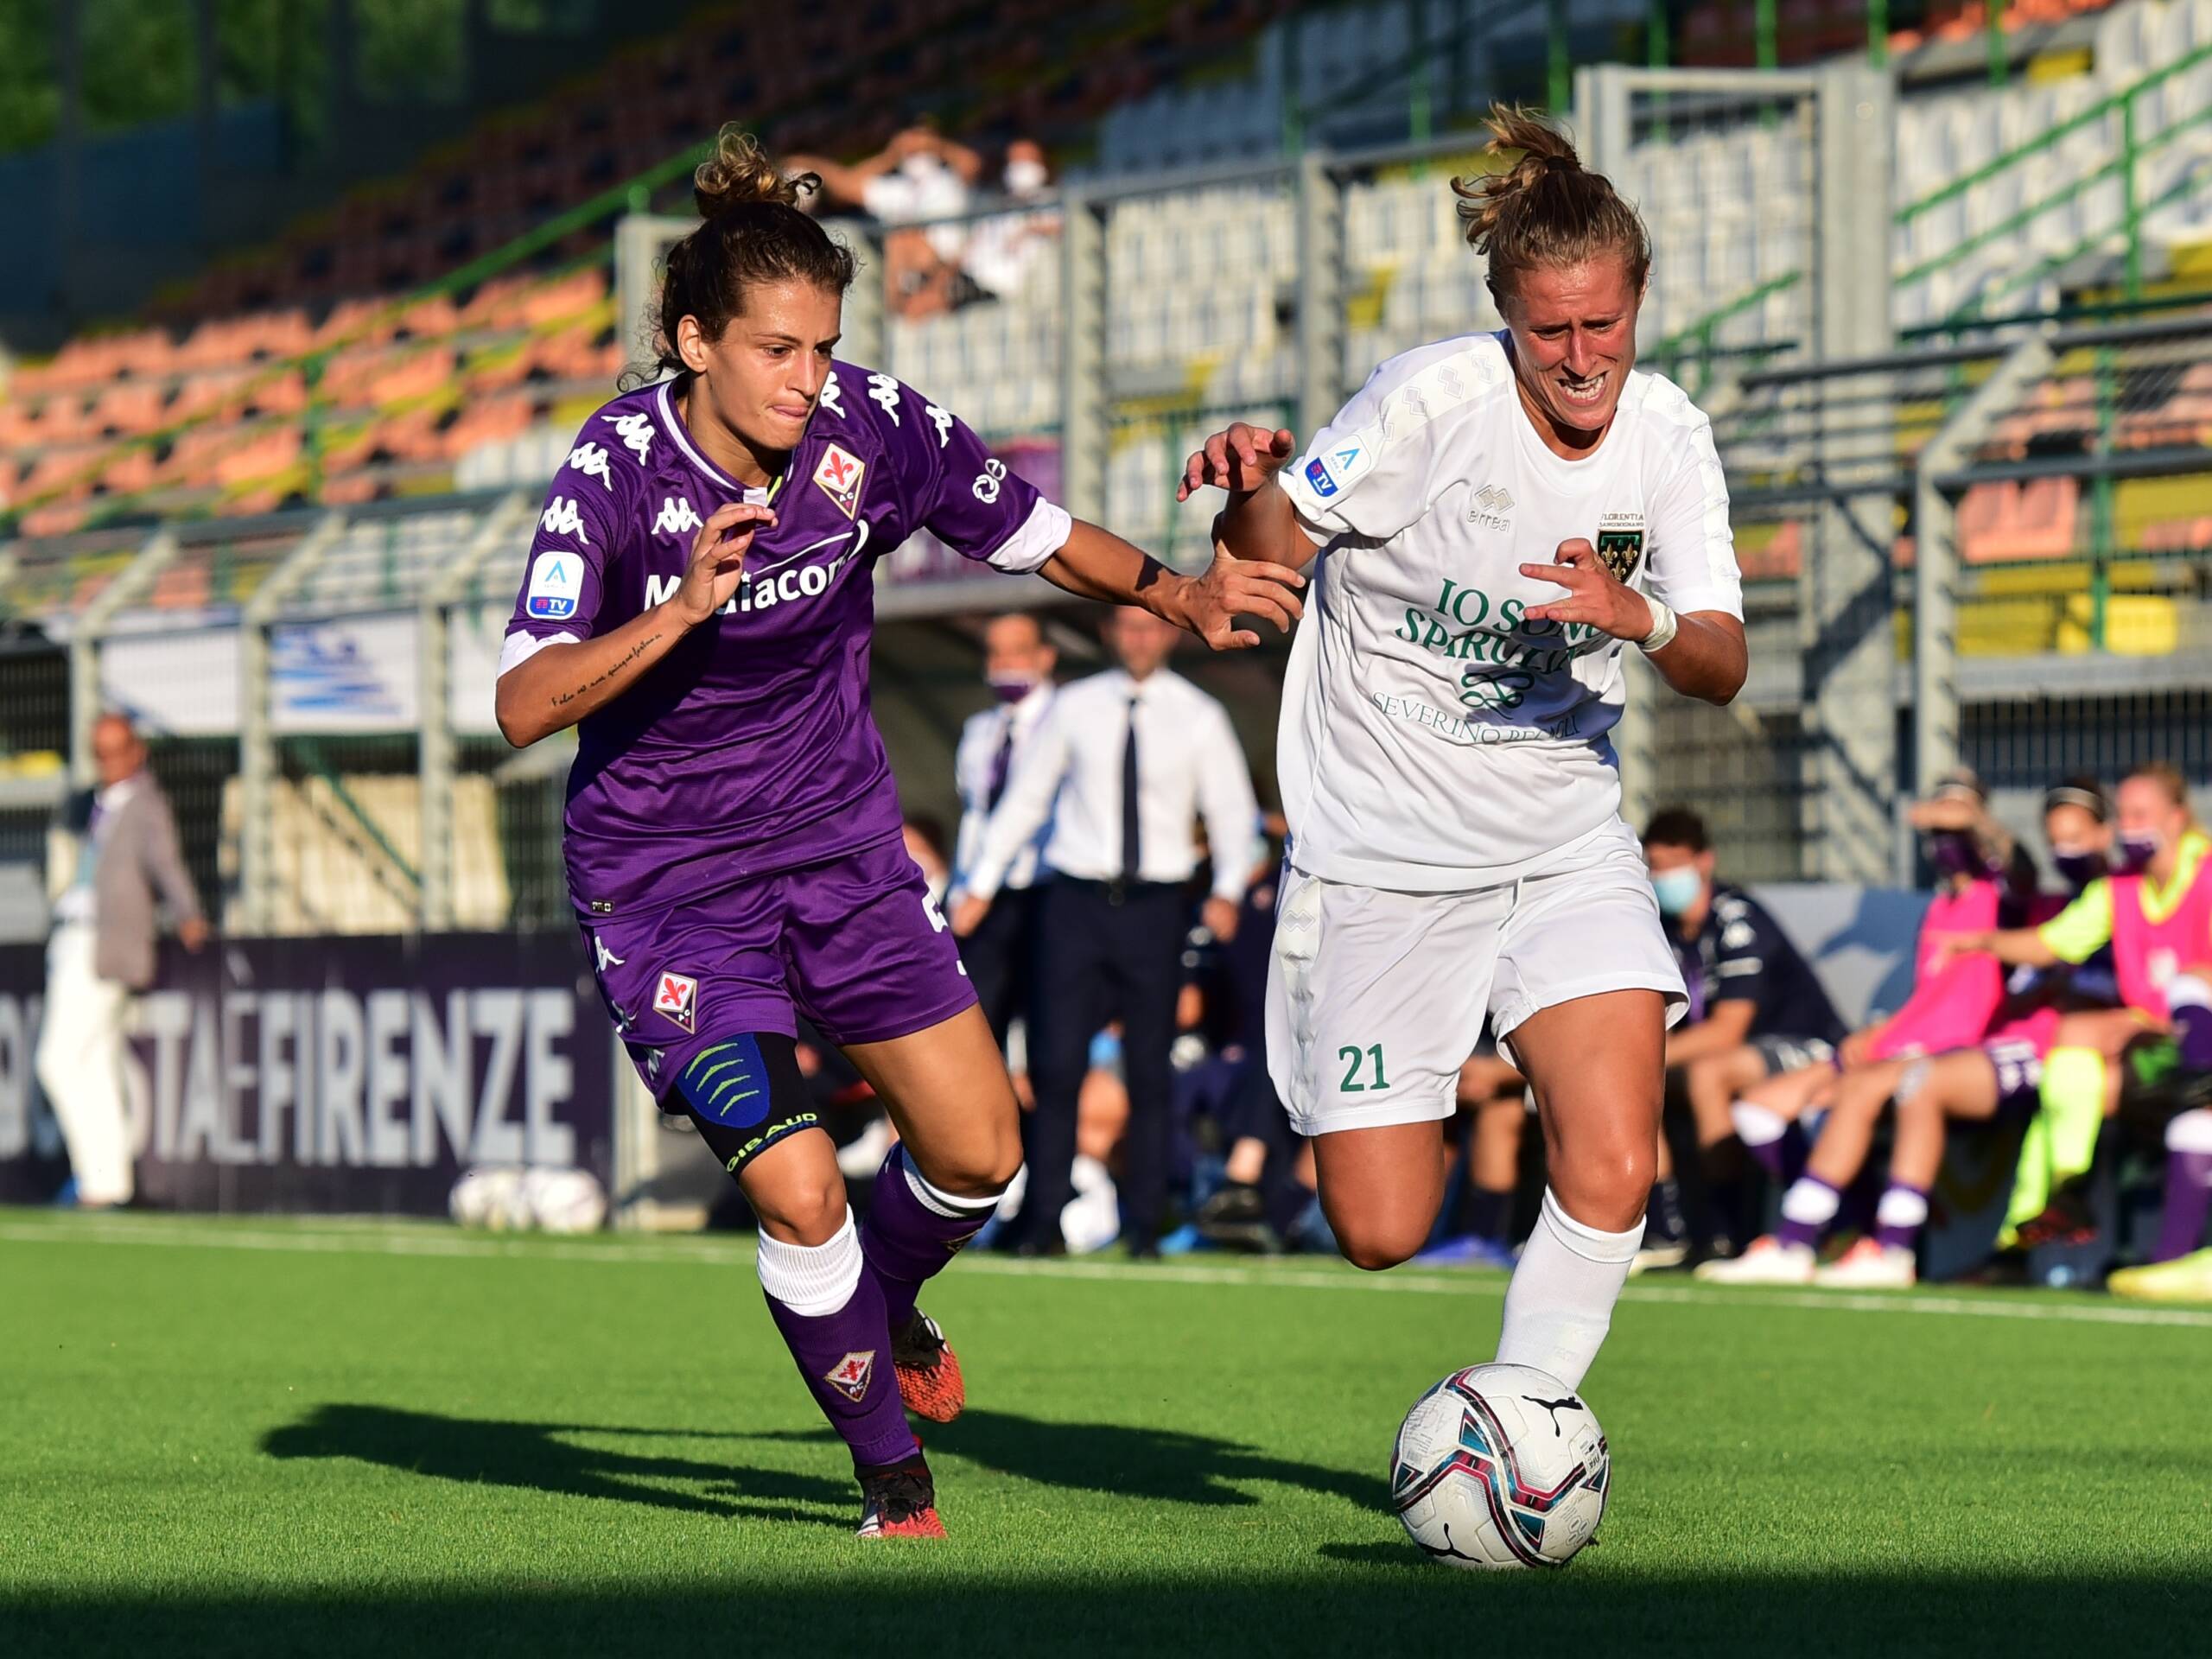 Calcio Femminile, match spettacolare Tra Florentia San Gimignano e Fiorentina femminile